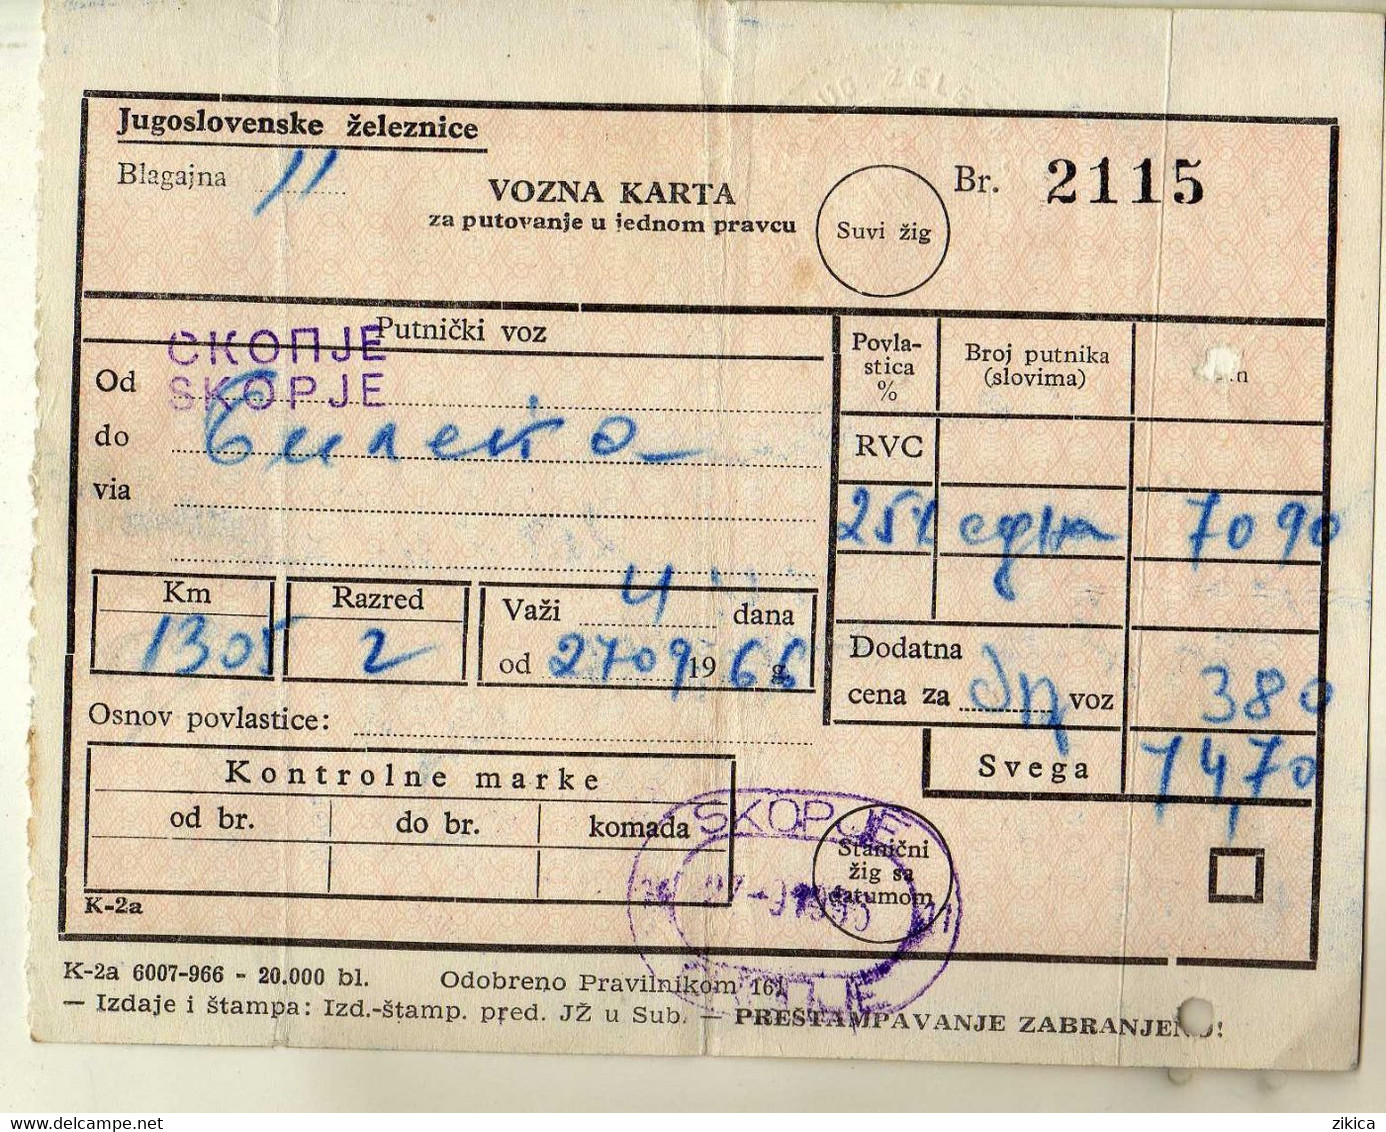 Transportation Ticket - Yugoslavia Railway Ticket Skopje Macedonia - Bileca Bosnia And Herzegovina - Europe